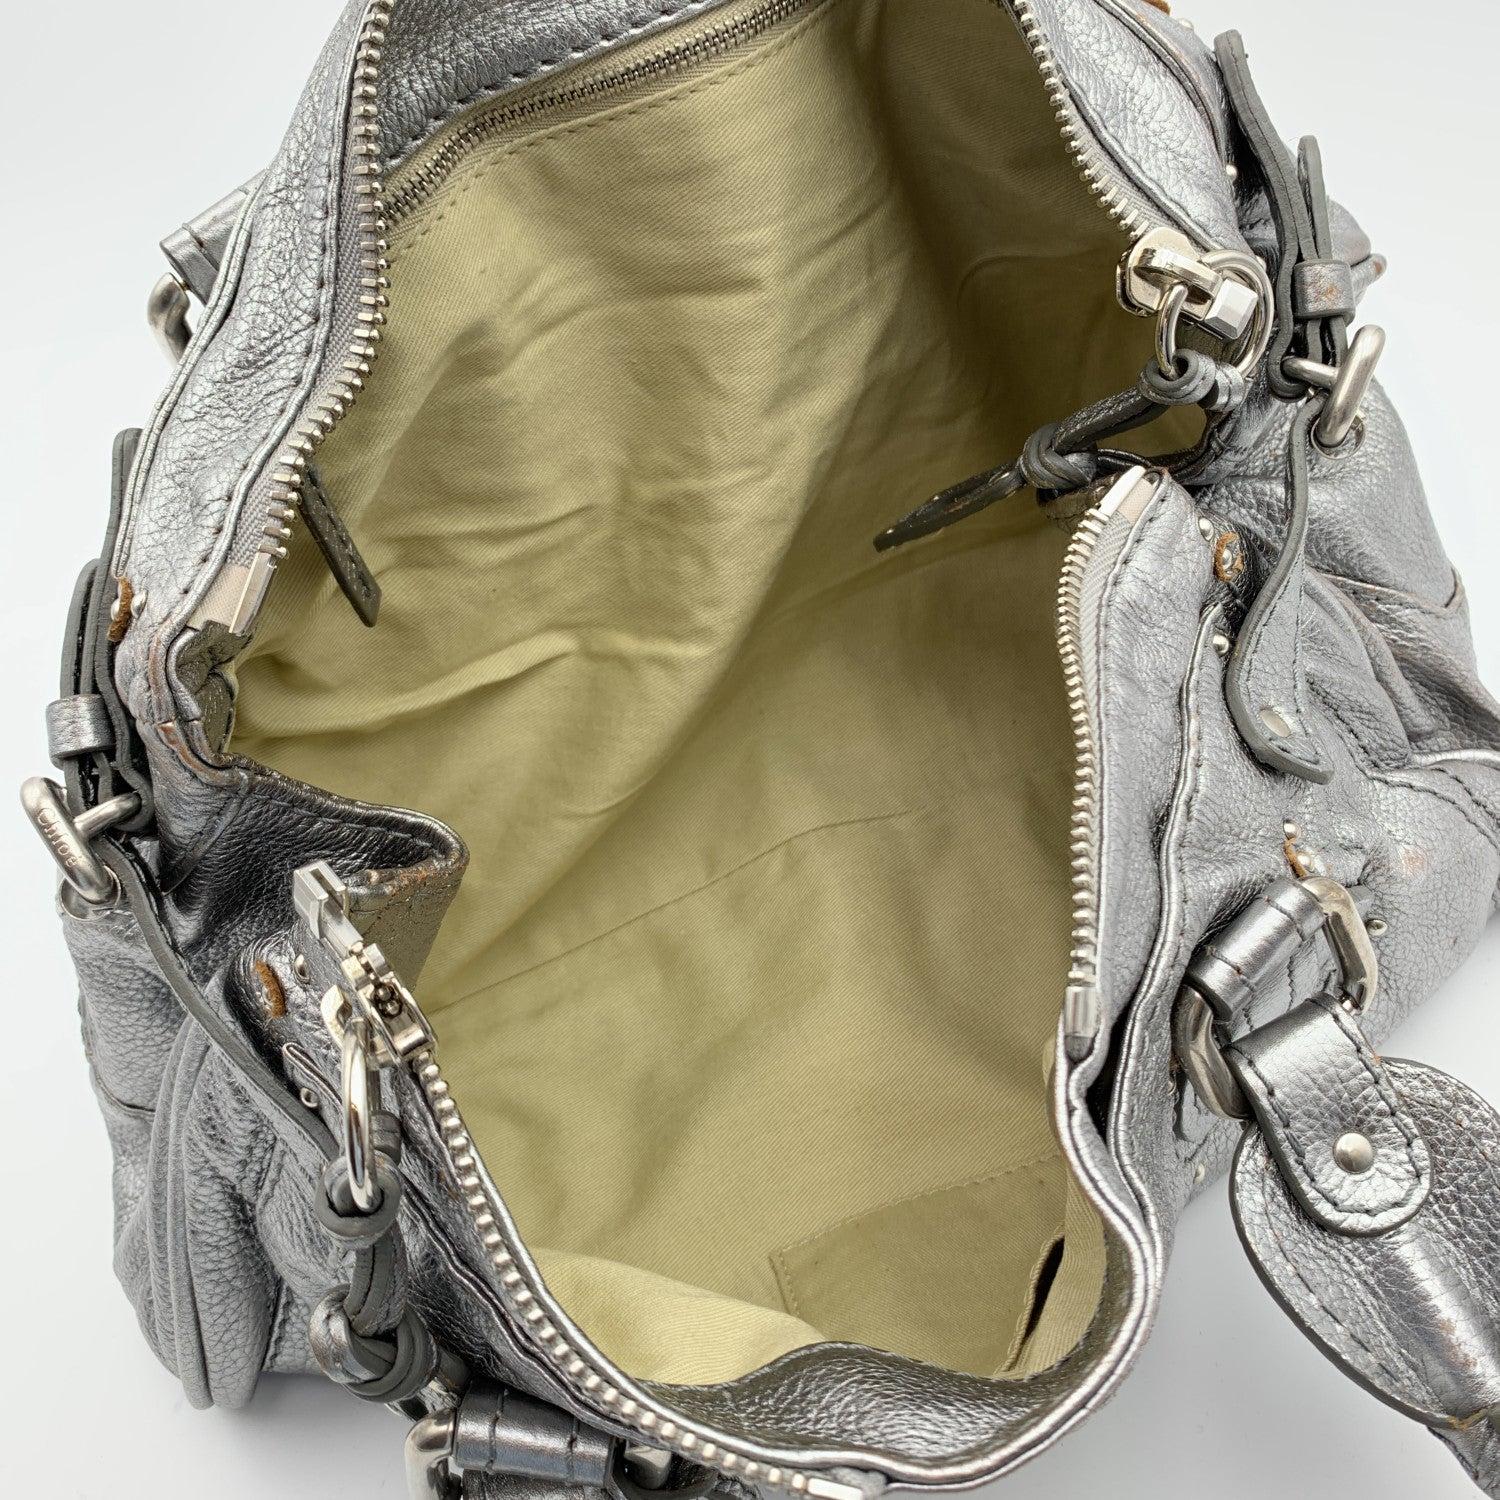 Chloe Silver Metal Leather Paddington Tote Bag Satchel Handbag 3